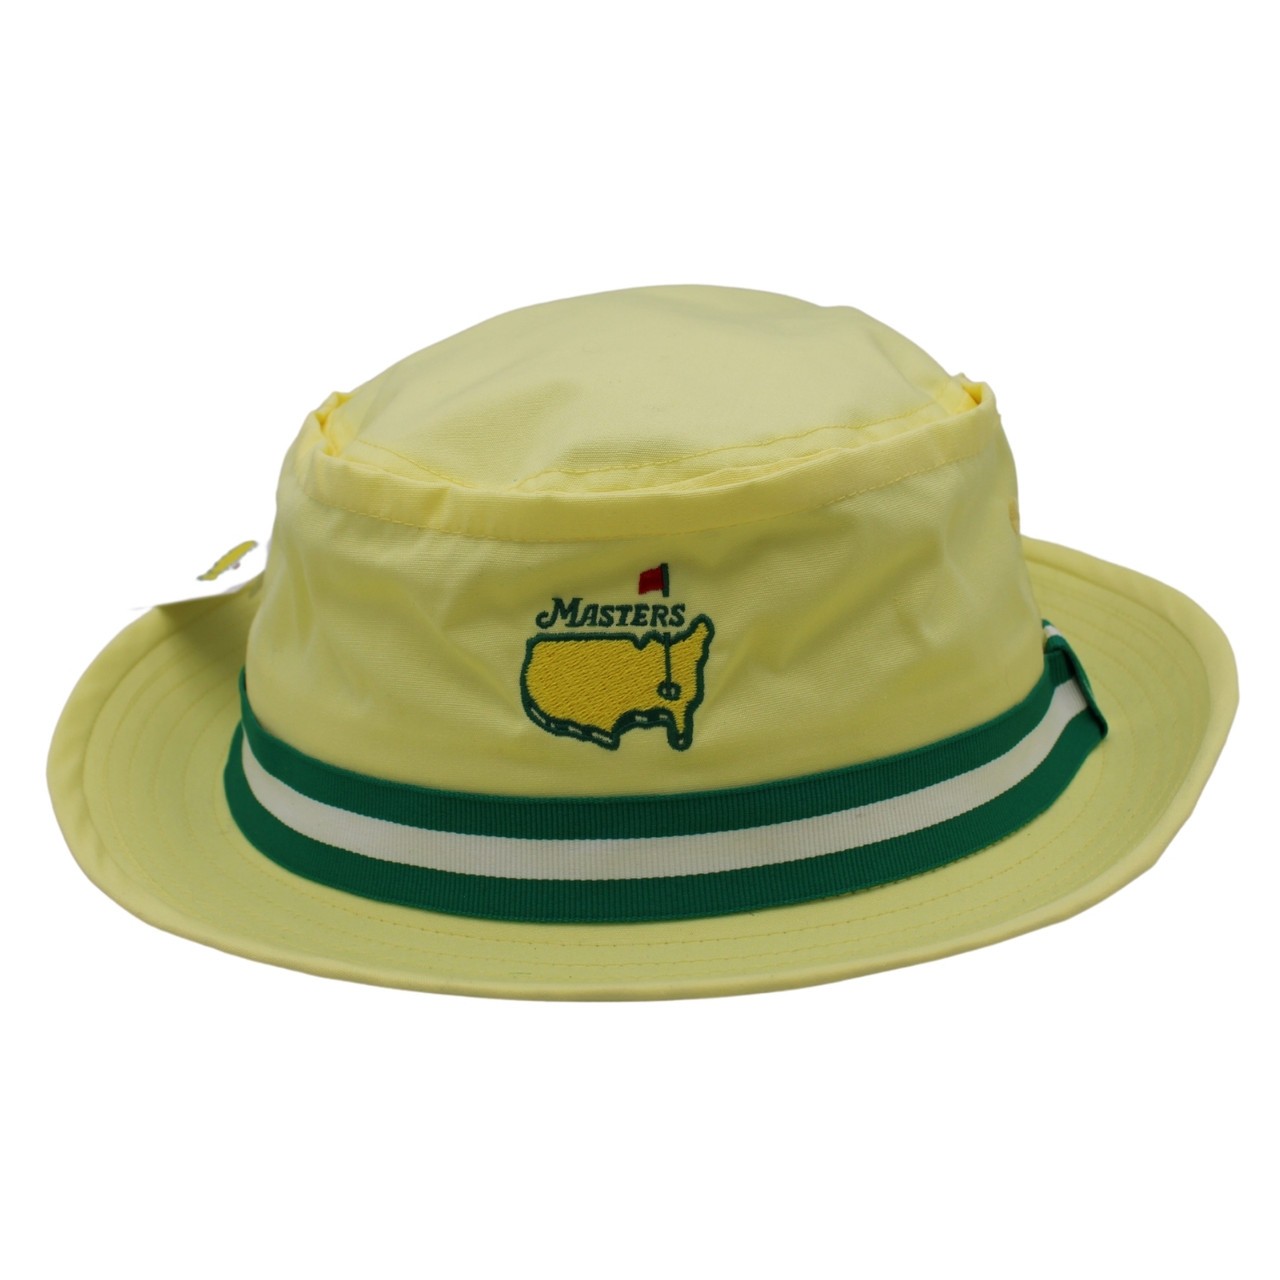 Masters Yellow Bucket Hat ()